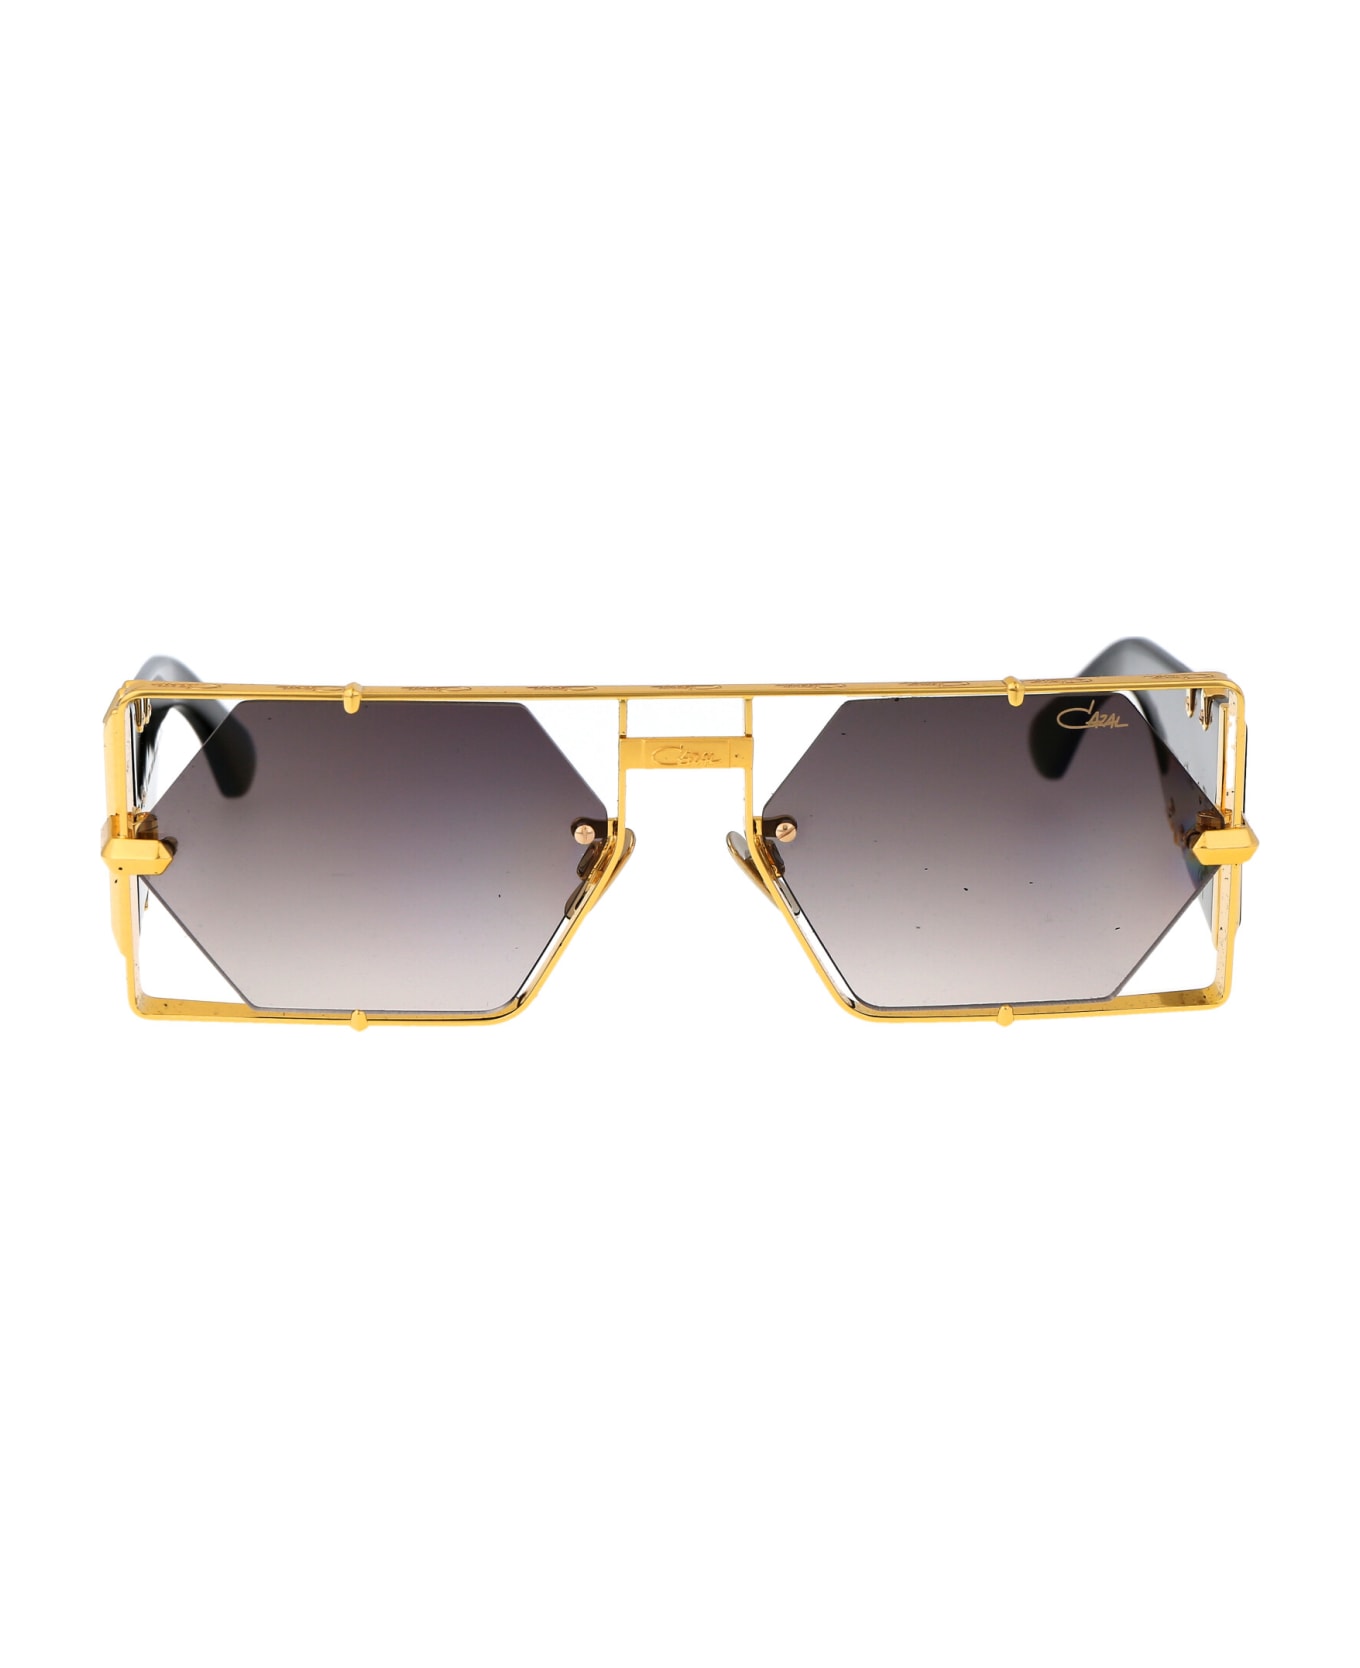 Cazal Mod. 004 Sunglasses - 001 GOLD BLACK 